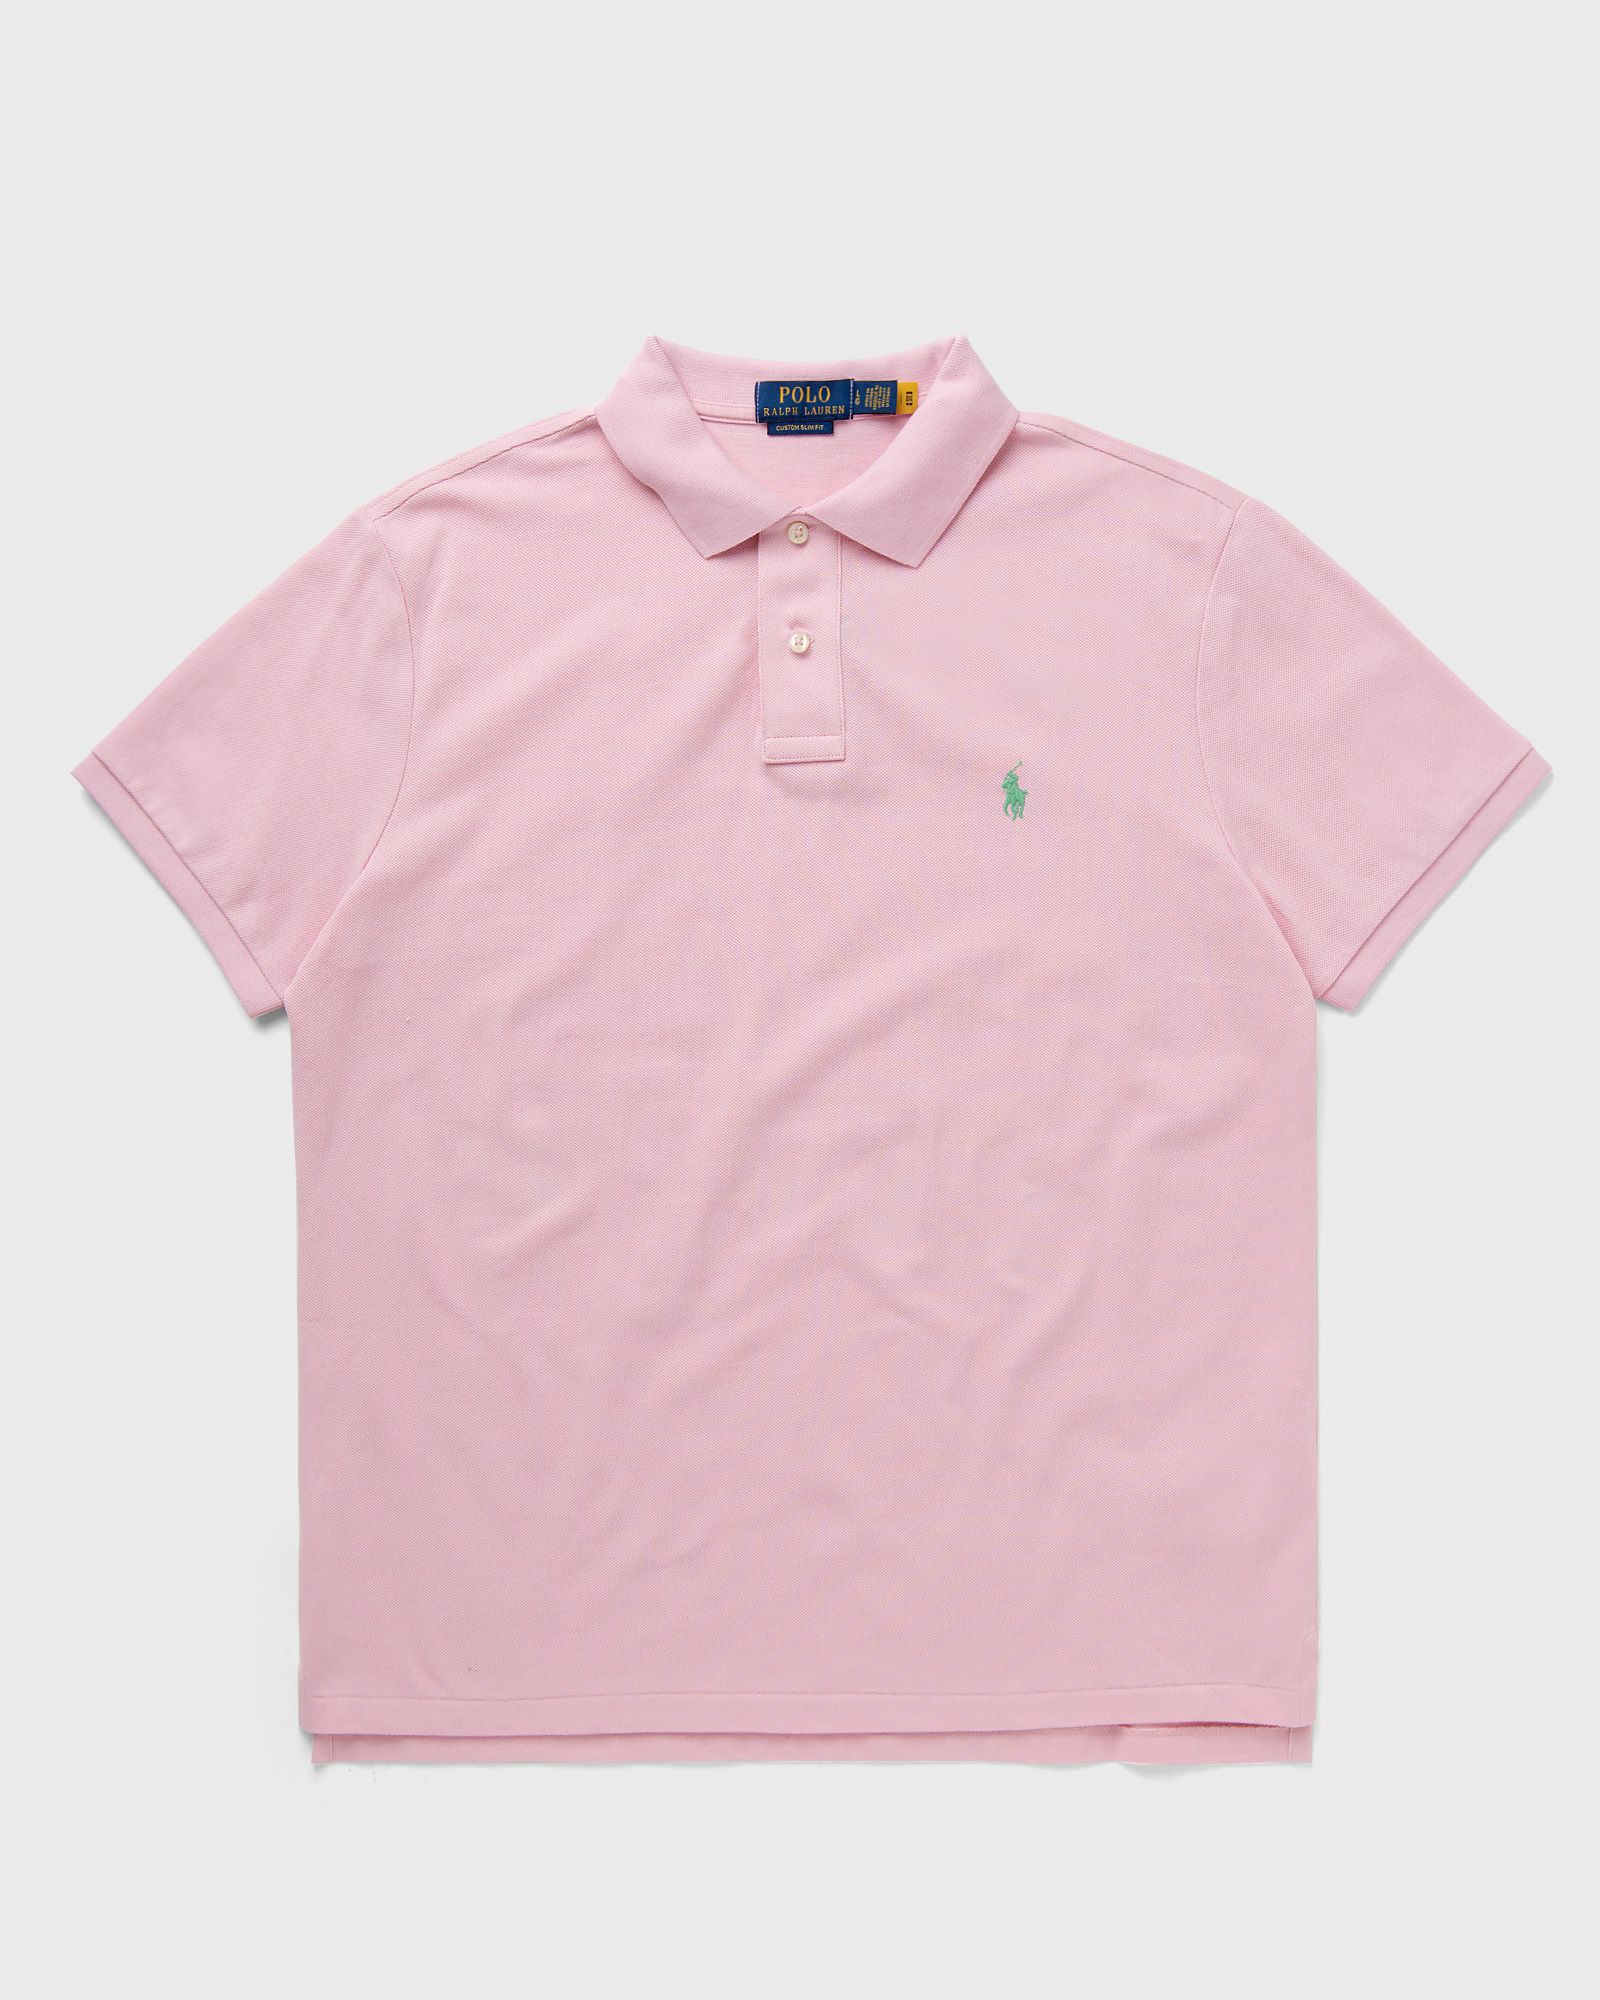 Polo Ralph Lauren - short sleeve-knit men polos pink in größe:xxl